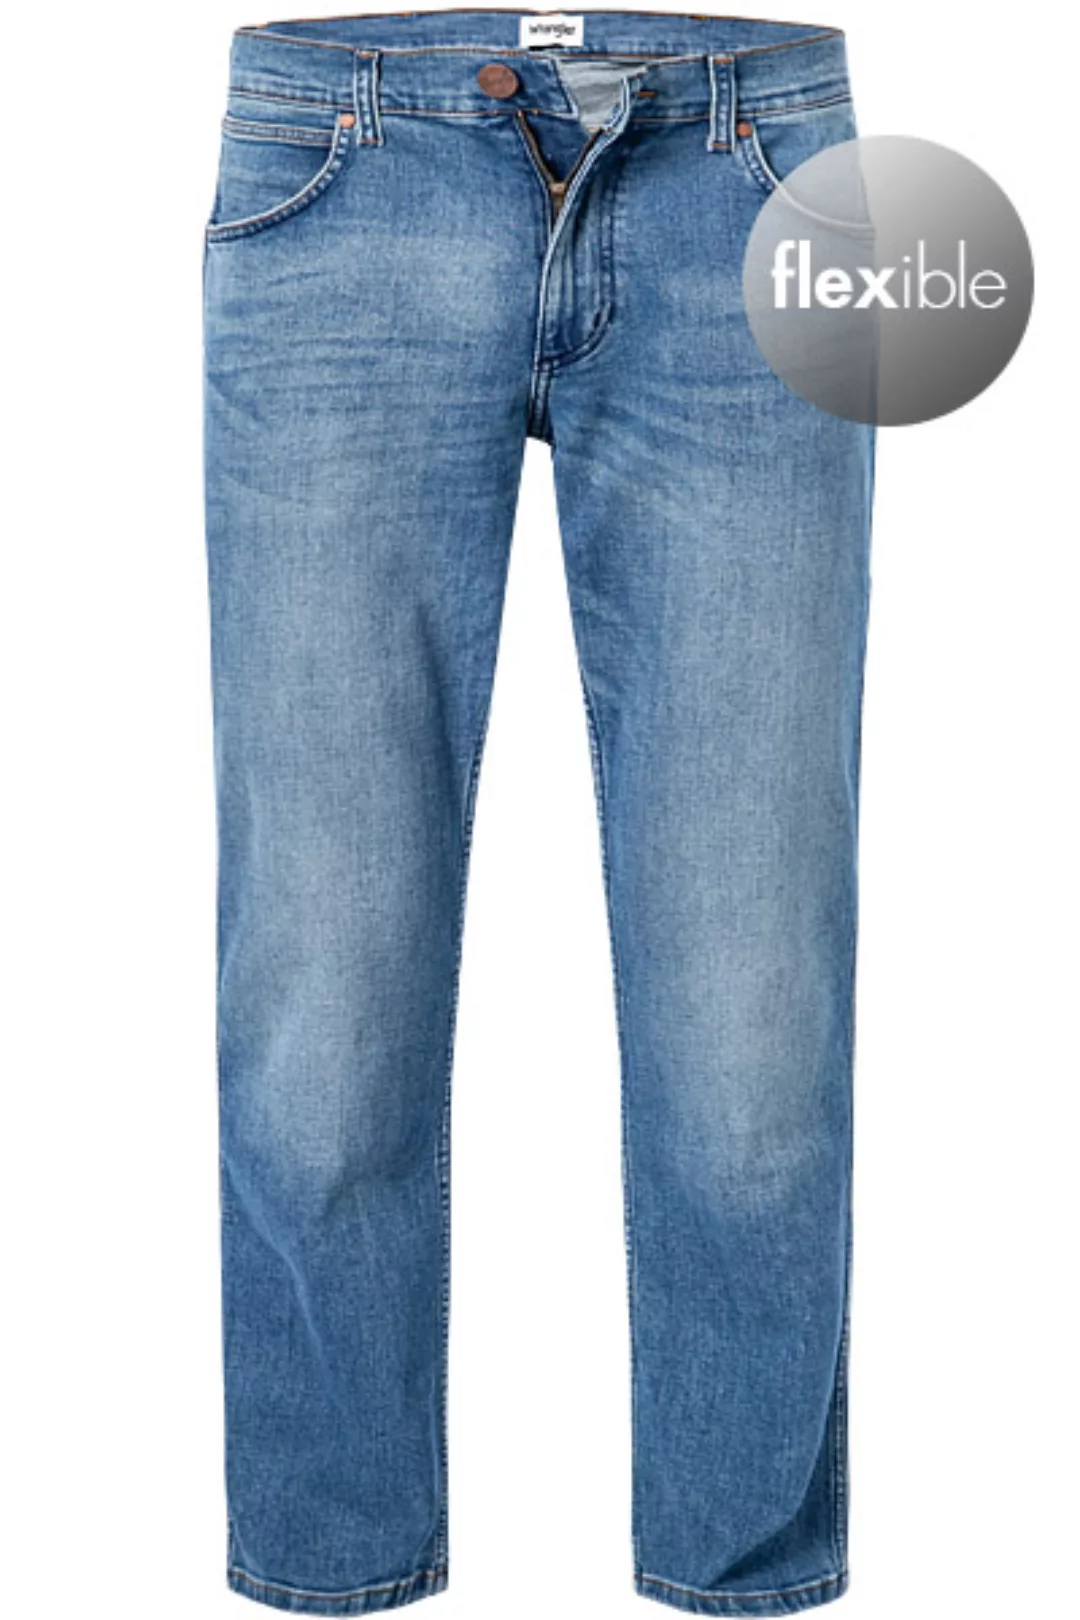 Wrangler Jeans Greensboro blue fever W15QQ892R günstig online kaufen